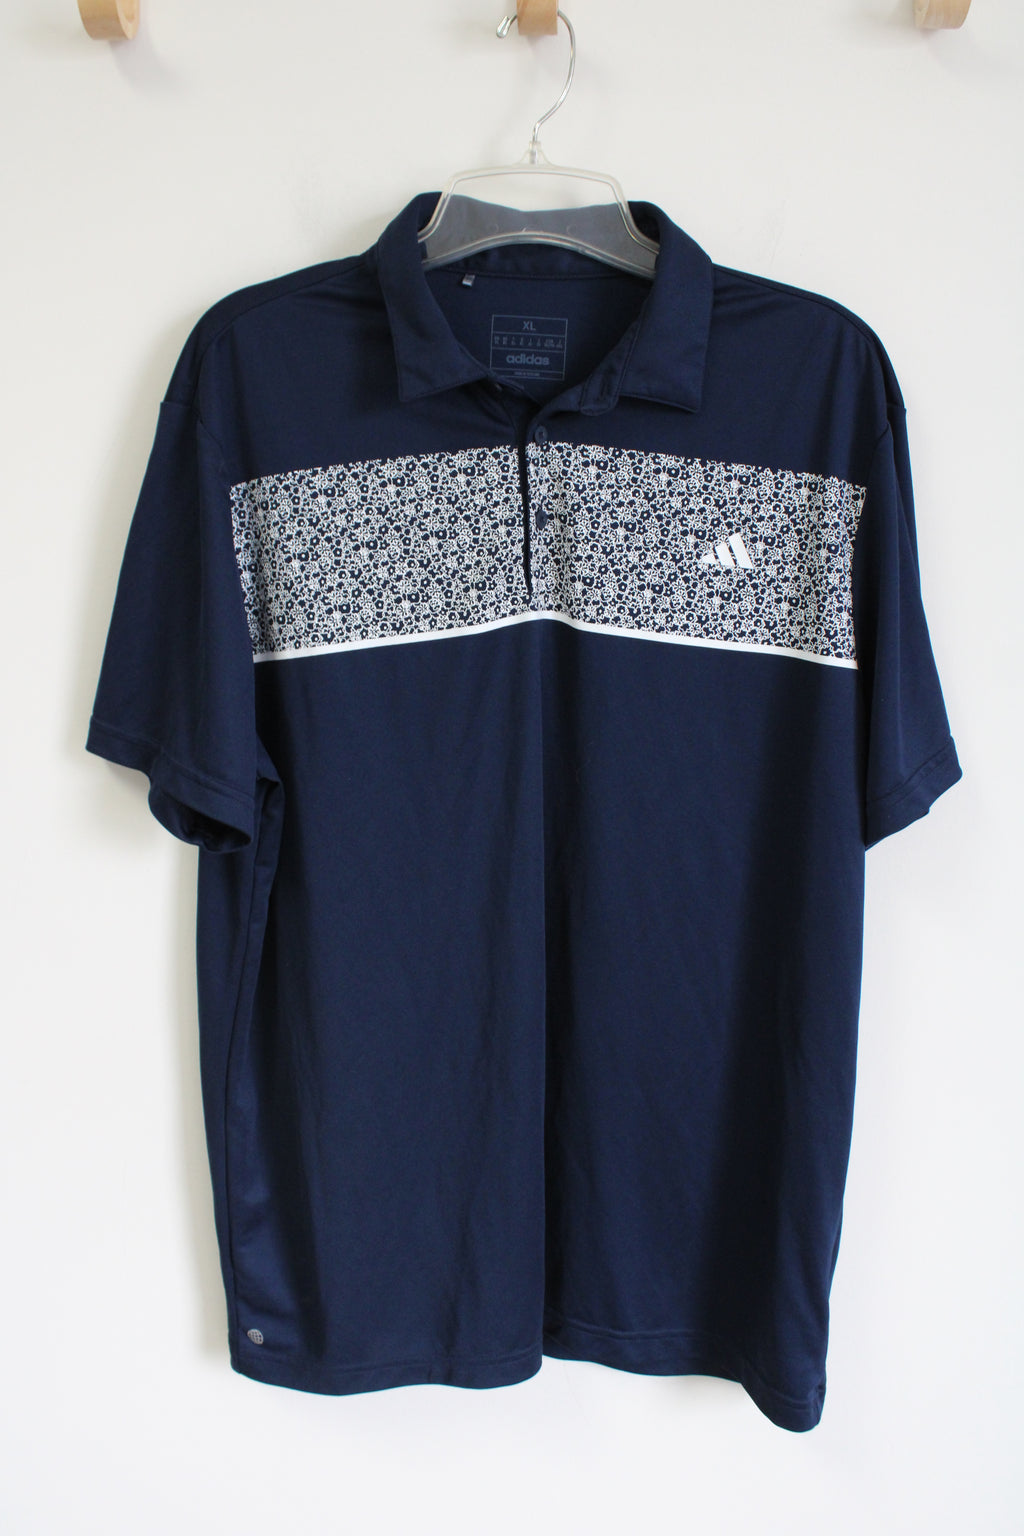 Adidas Navy Blue Floral Stripe Polo Shirt | XL